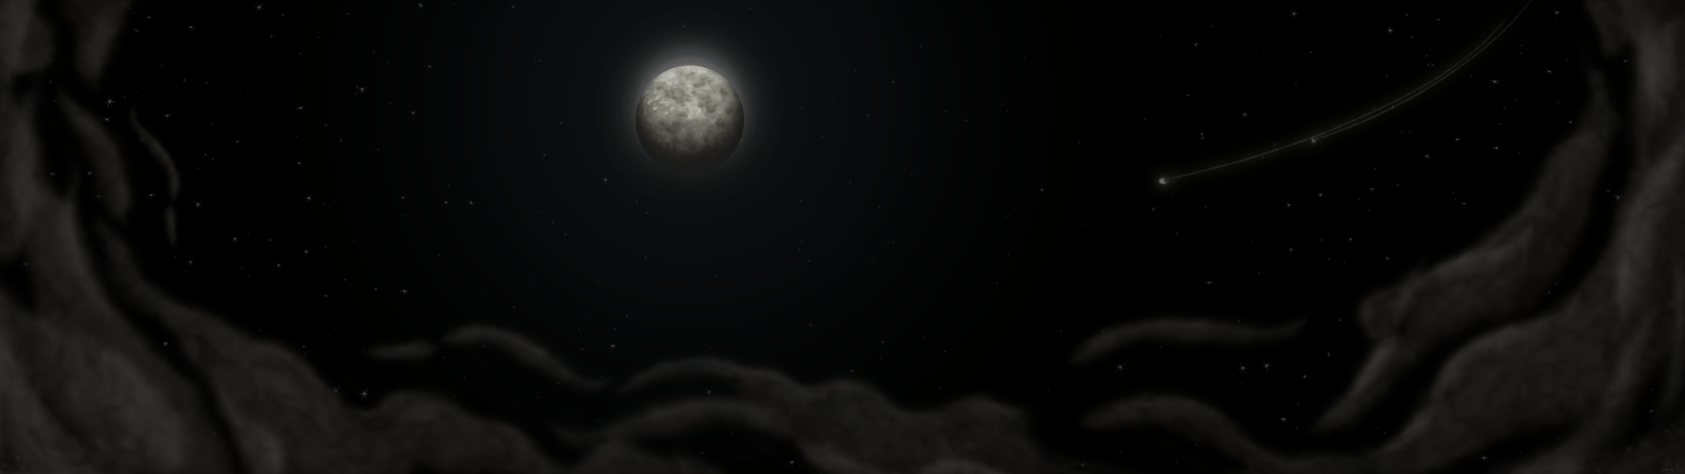 Moonlight [Dual 4K and 1080p 16:9 Wallpaper]